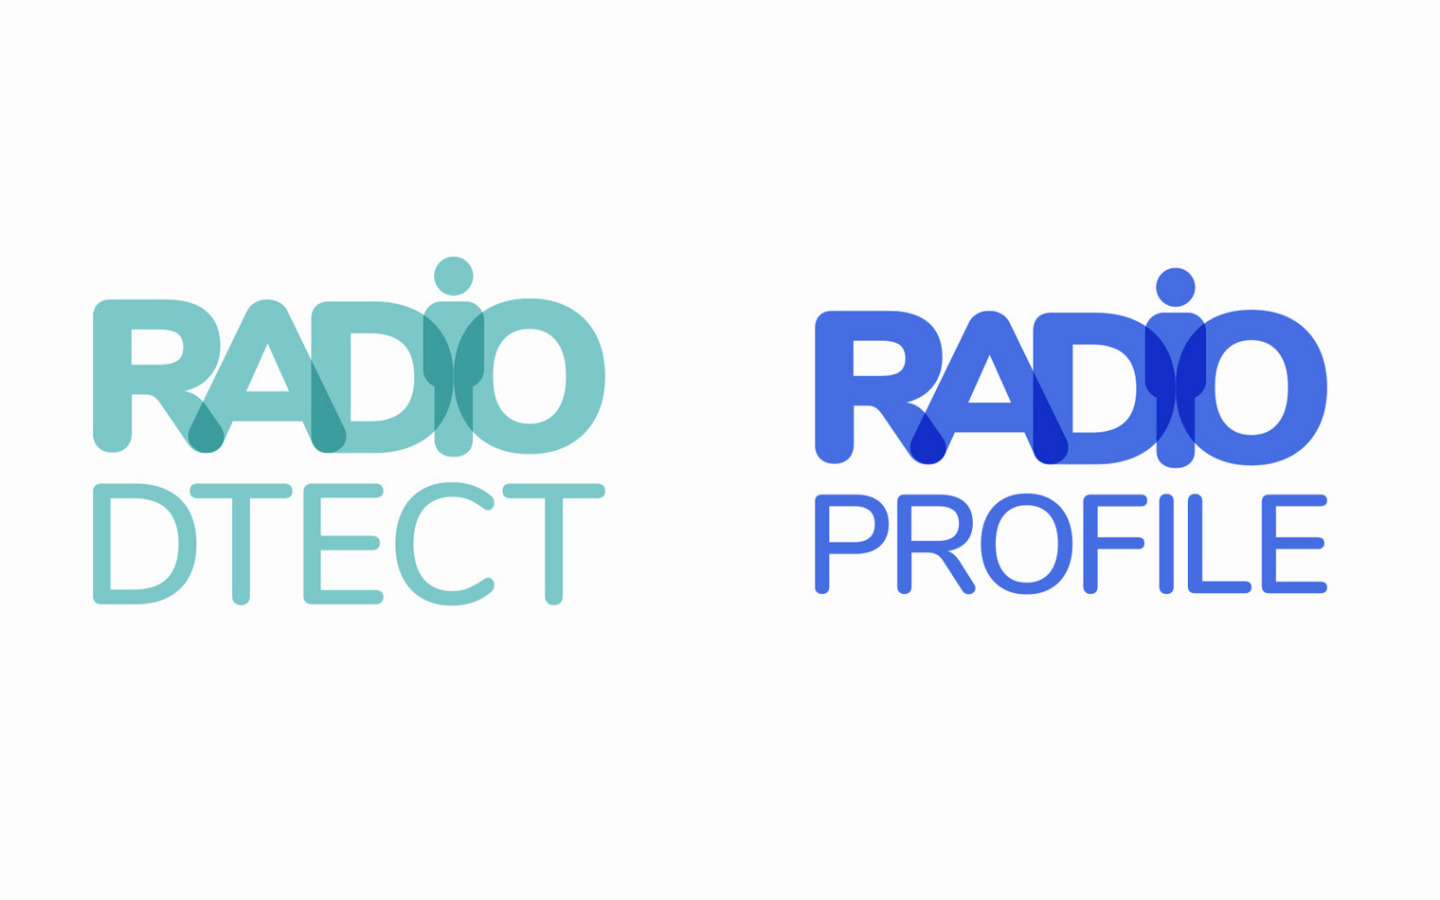 création de logo radio Dtect radio Profile biotech médicale